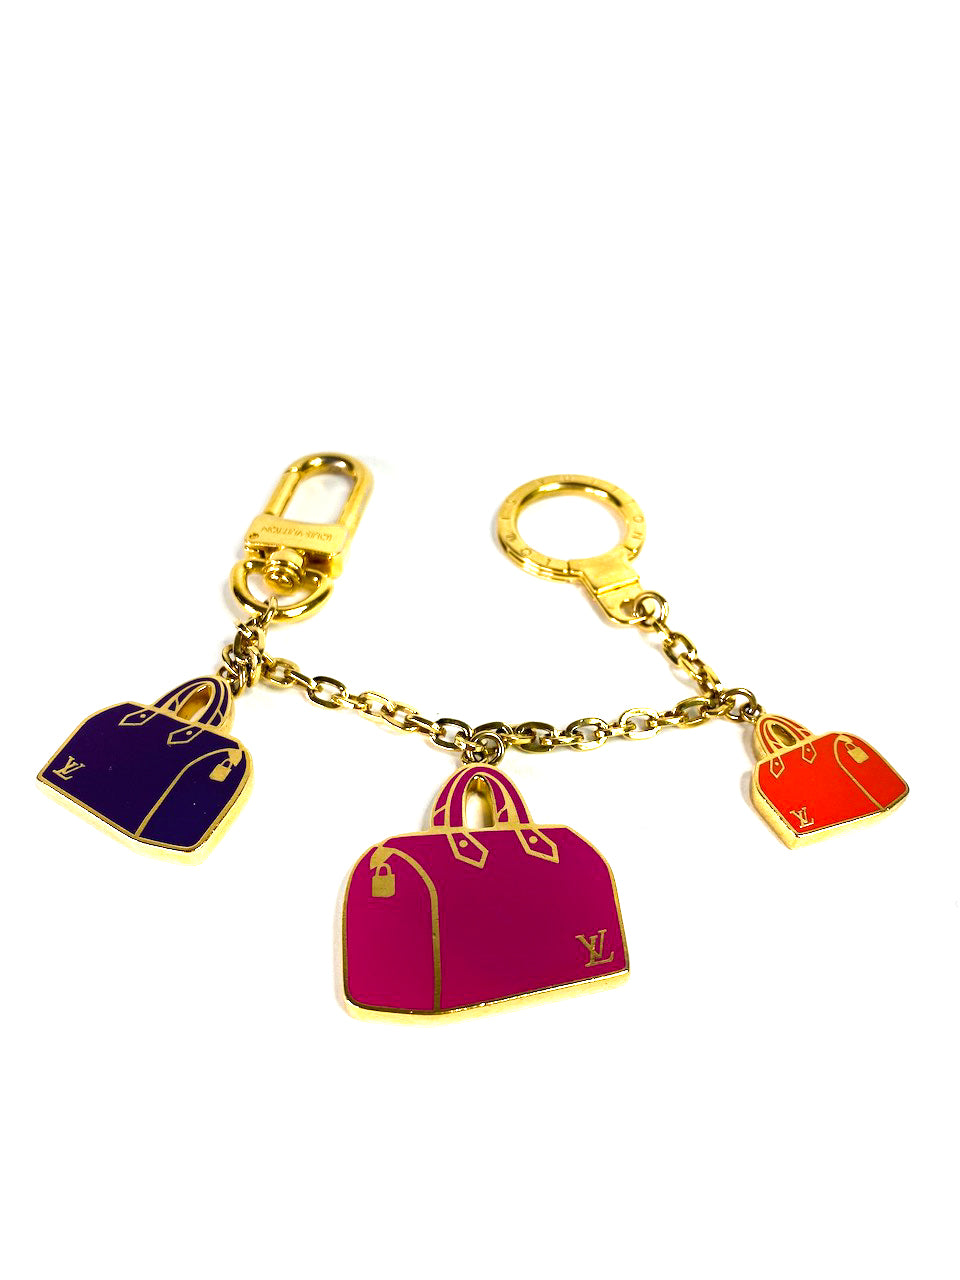 Louis Vuitton Multi Bag Charm - As Seen on Instagram - Siopaella Designer Exchange